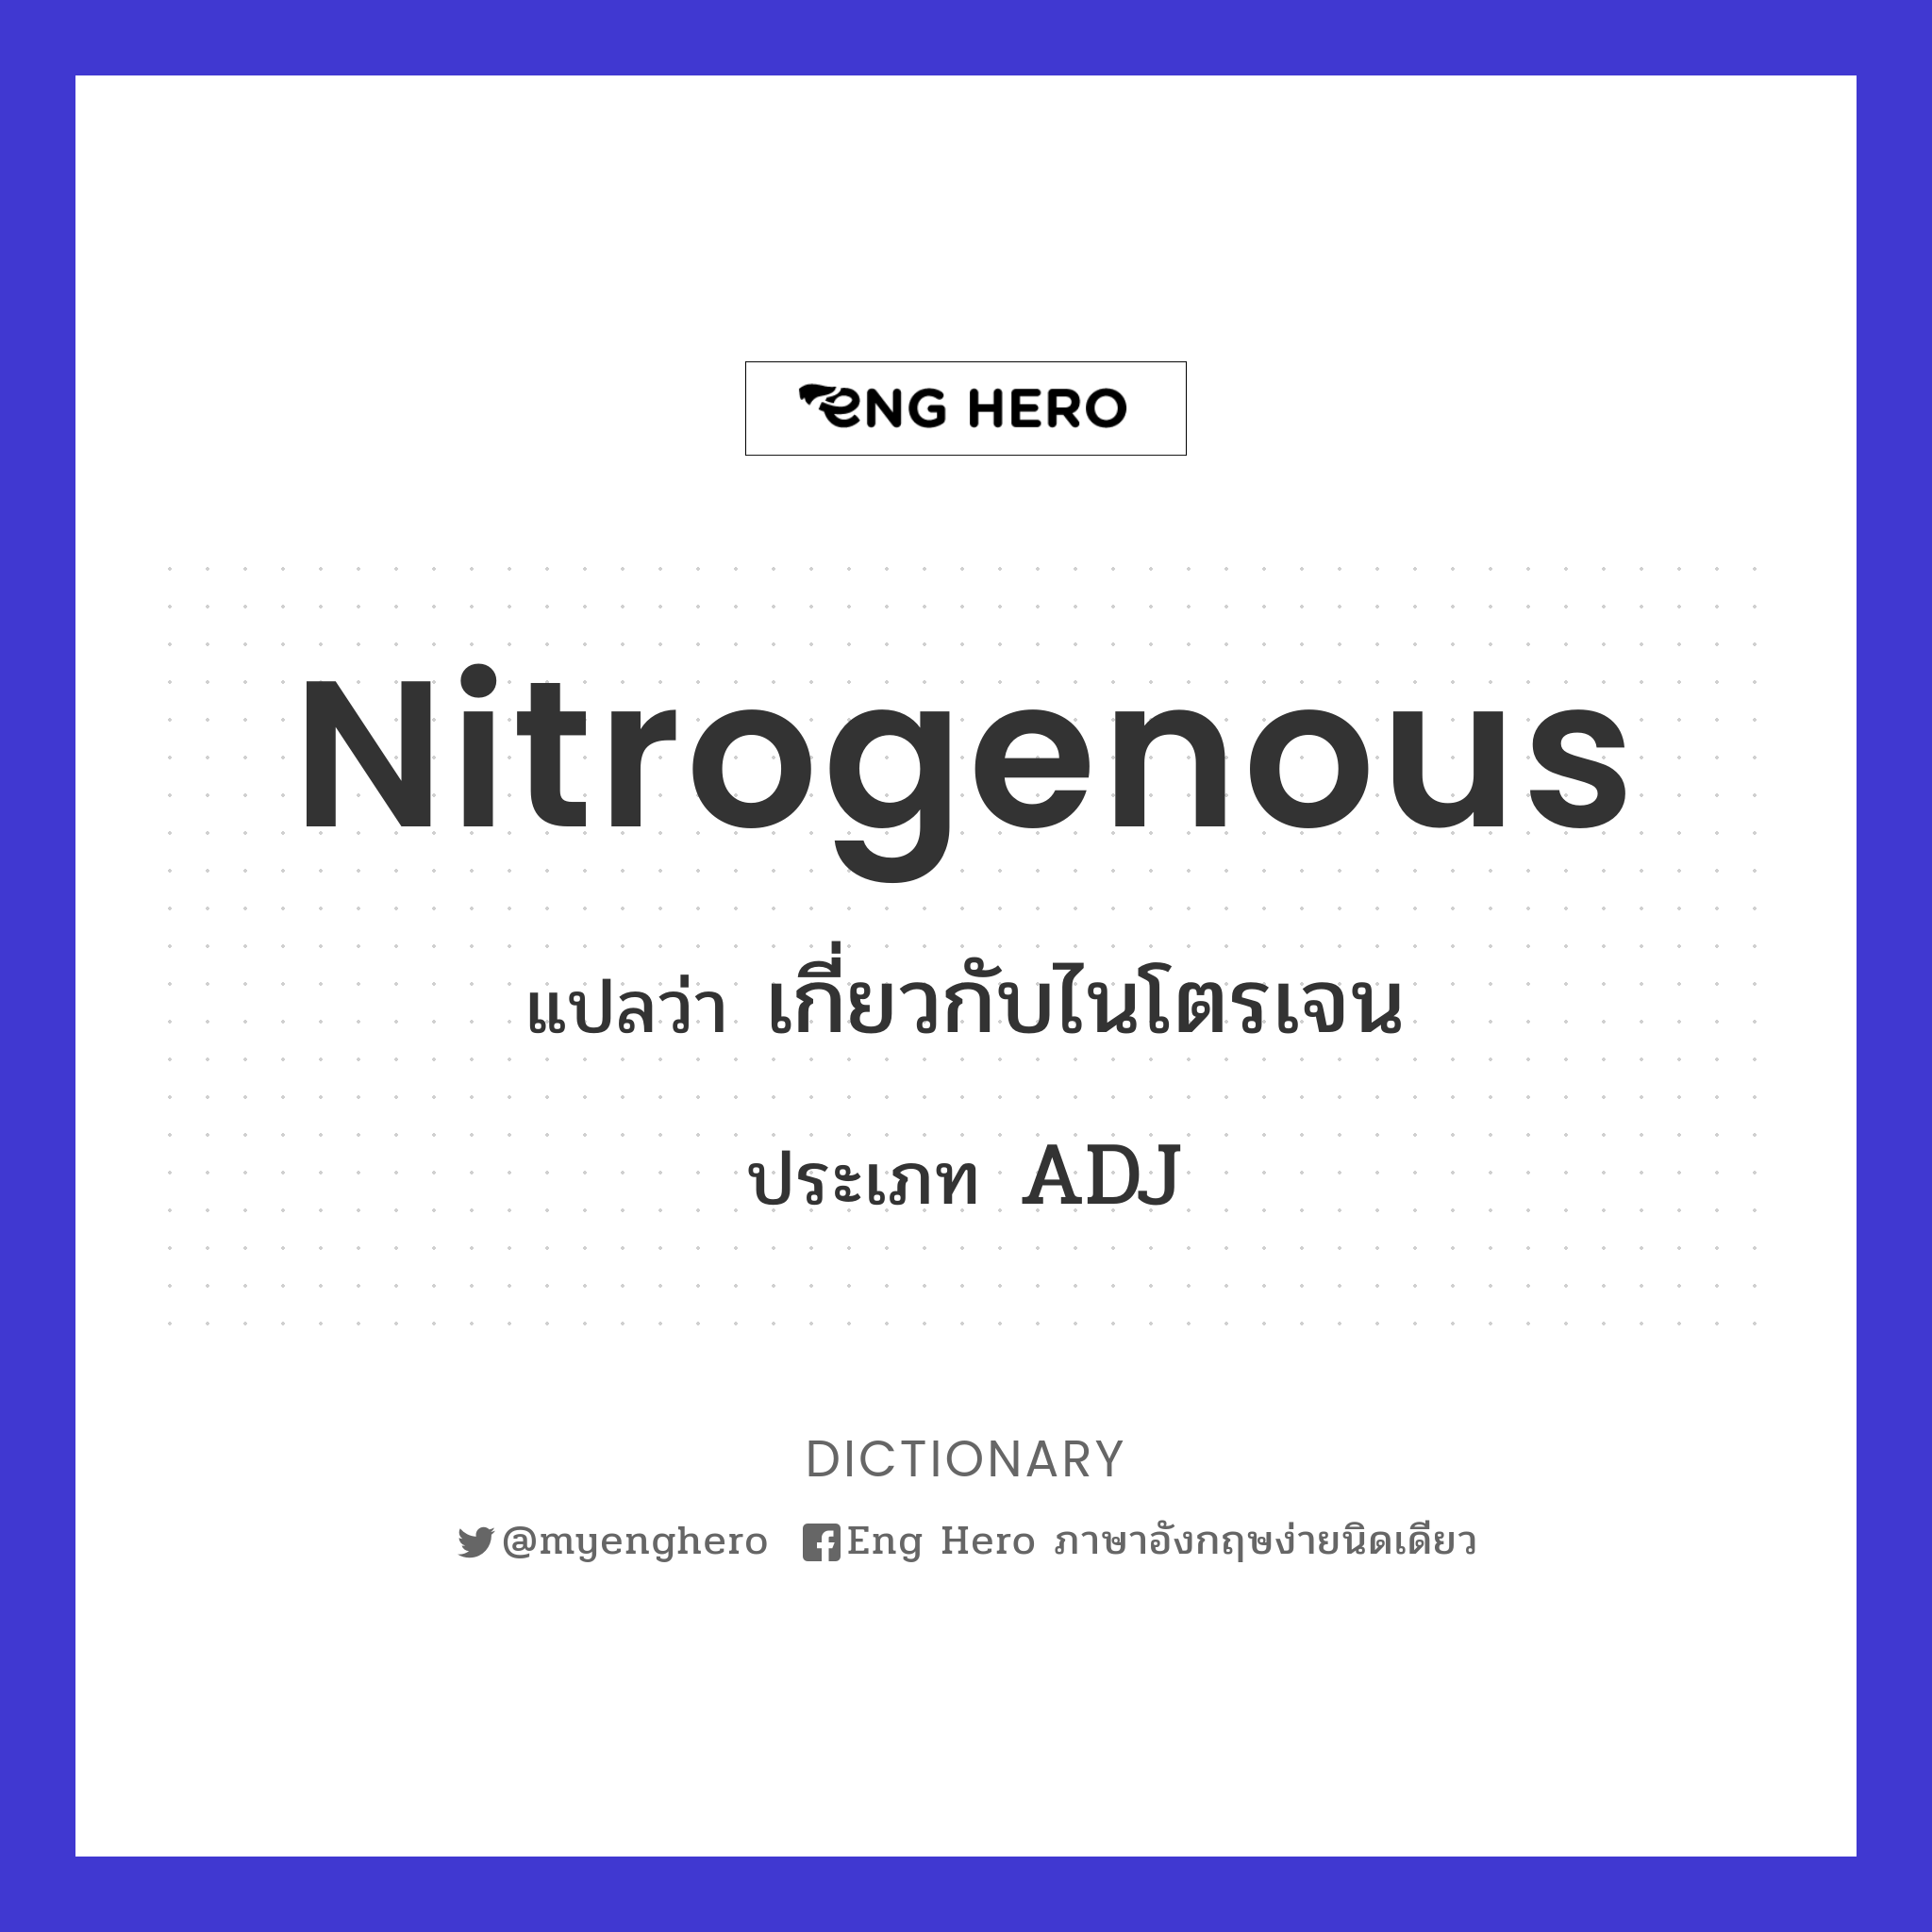 nitrogenous